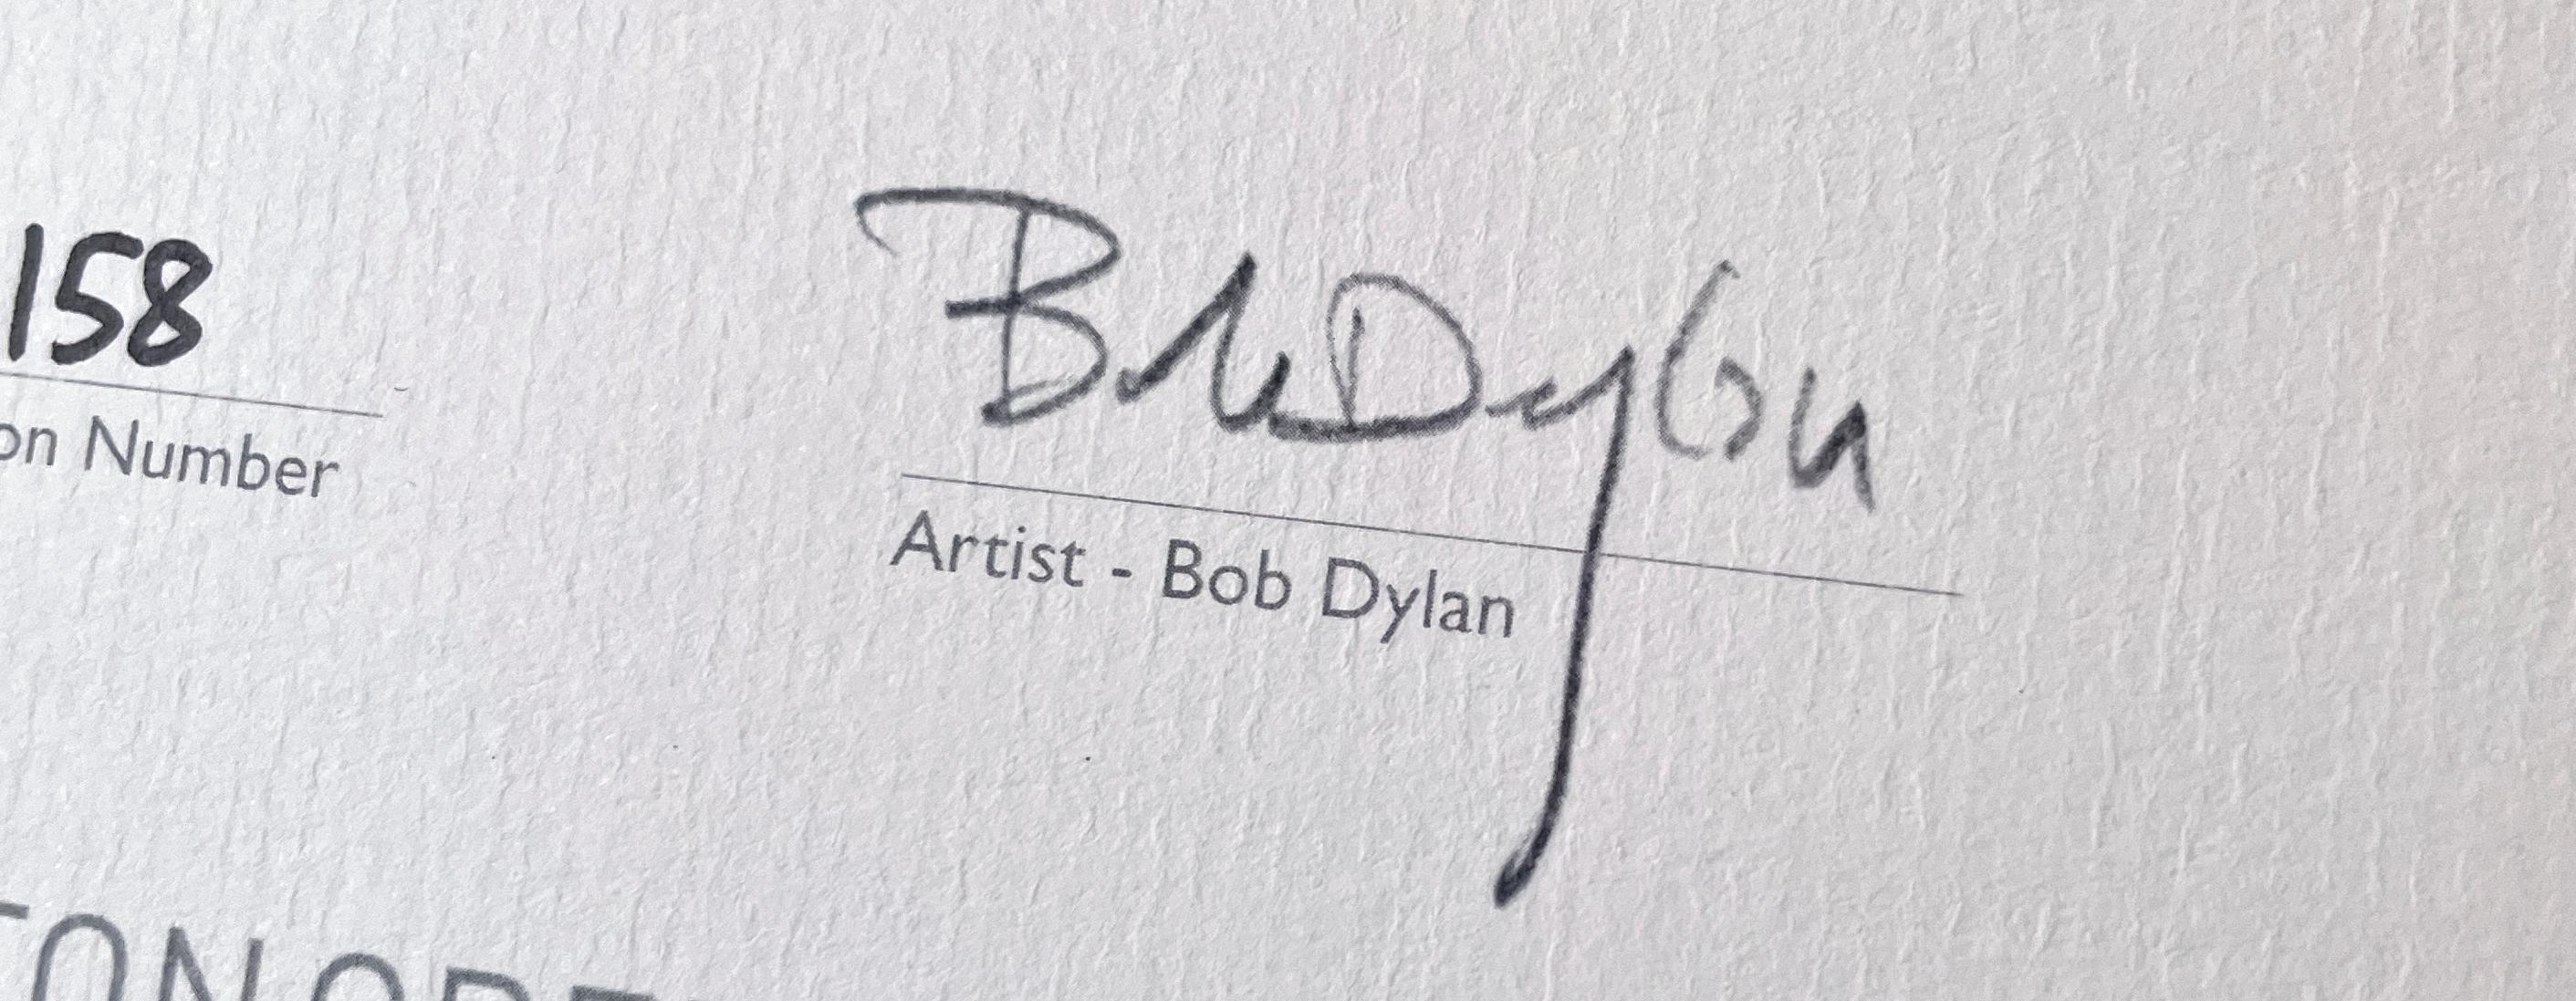 Train Tracks 2018 - Modern Print by Bob Dylan